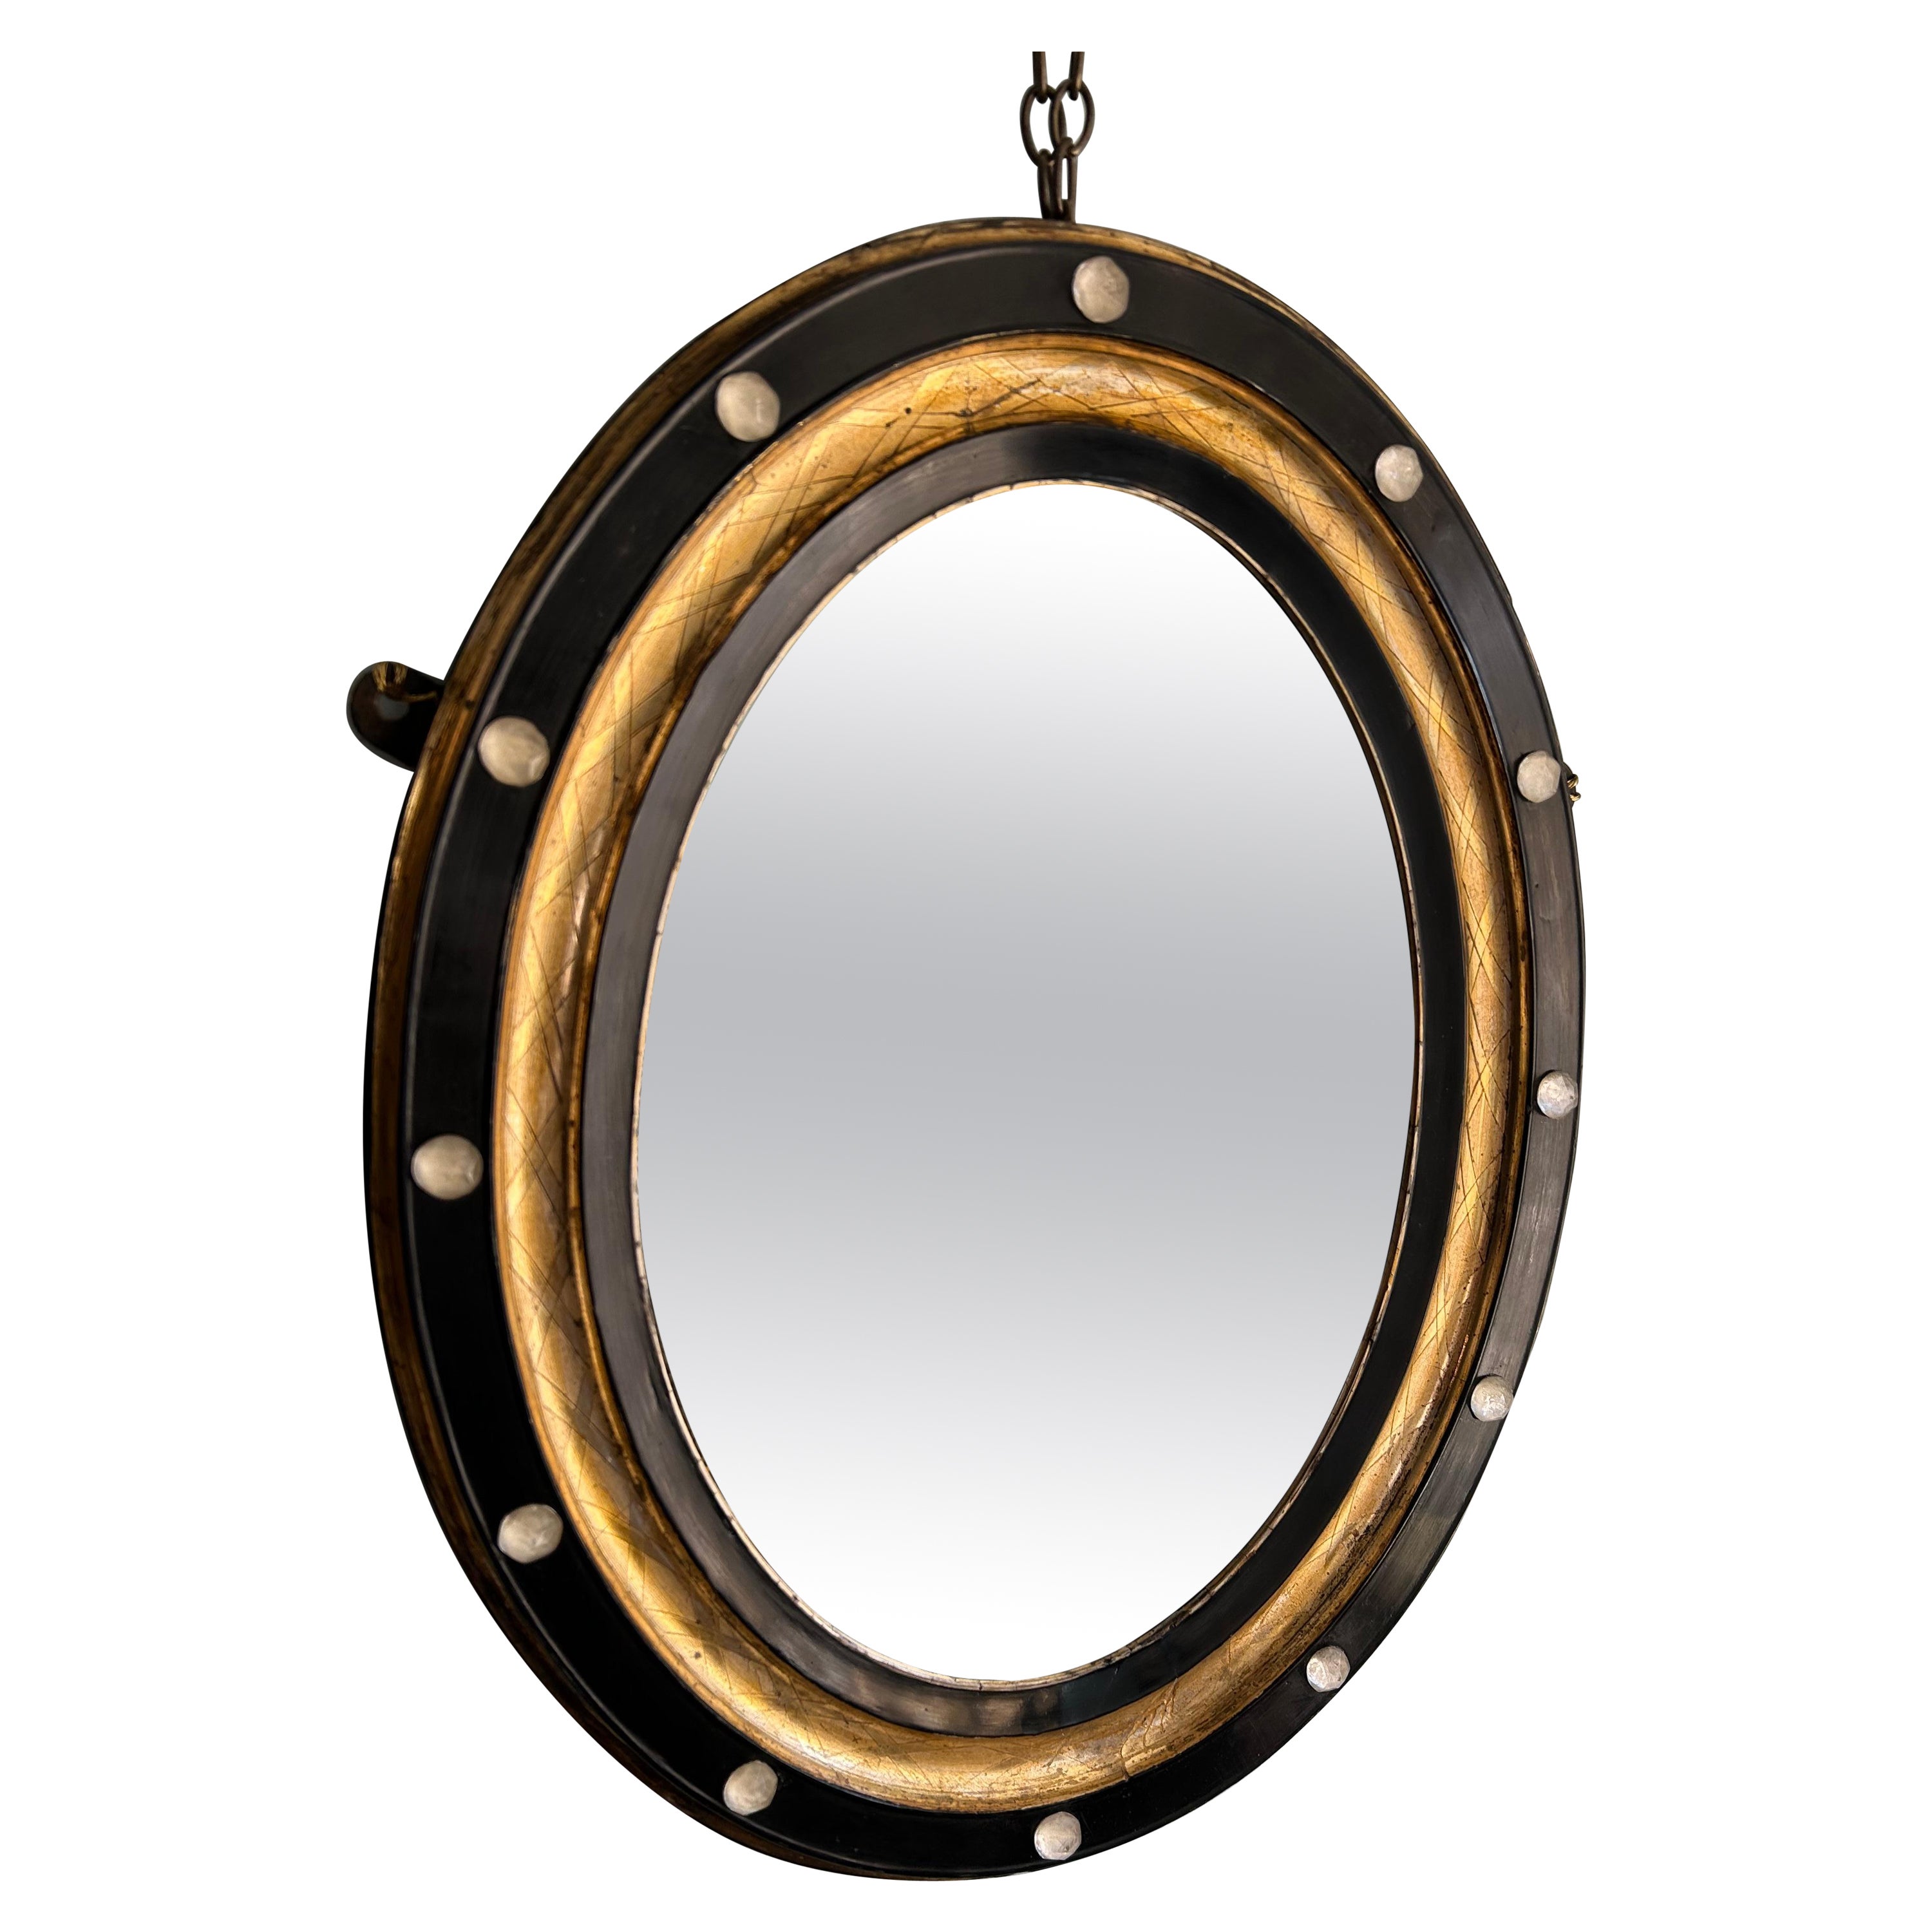 Antique 19th century Irish oval mirror 